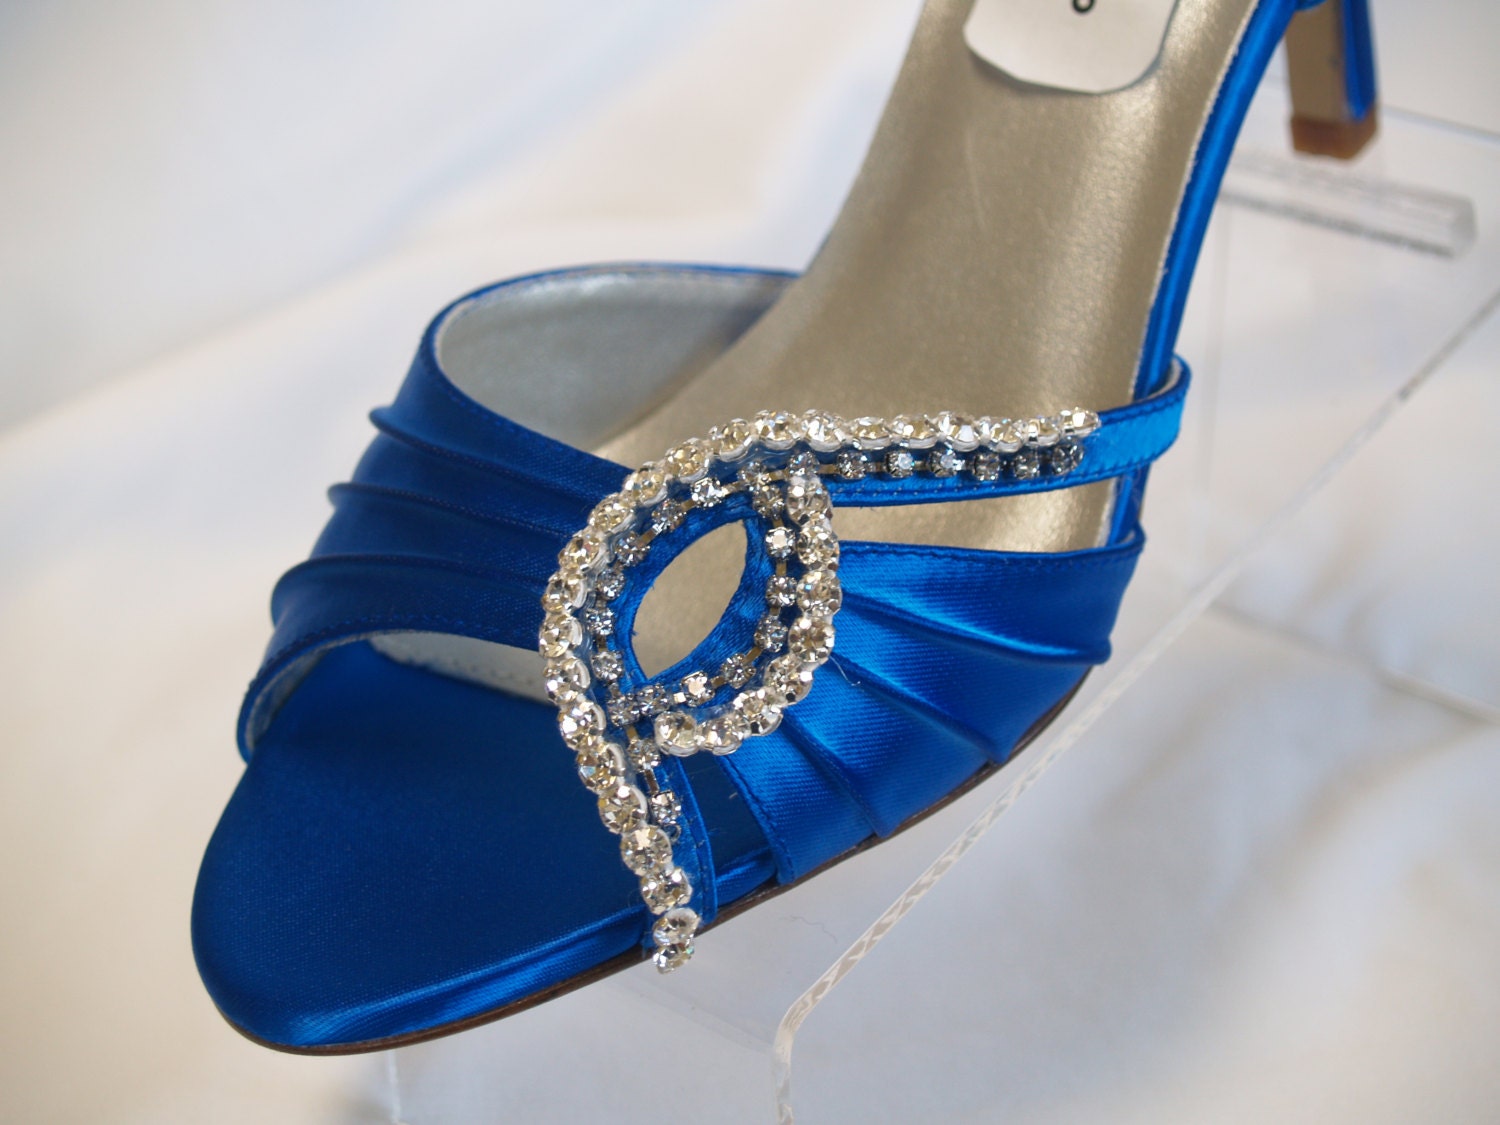 Blue Wedding Shoes RoyalBlue Crystals 2.5 heels by NewBrideCo